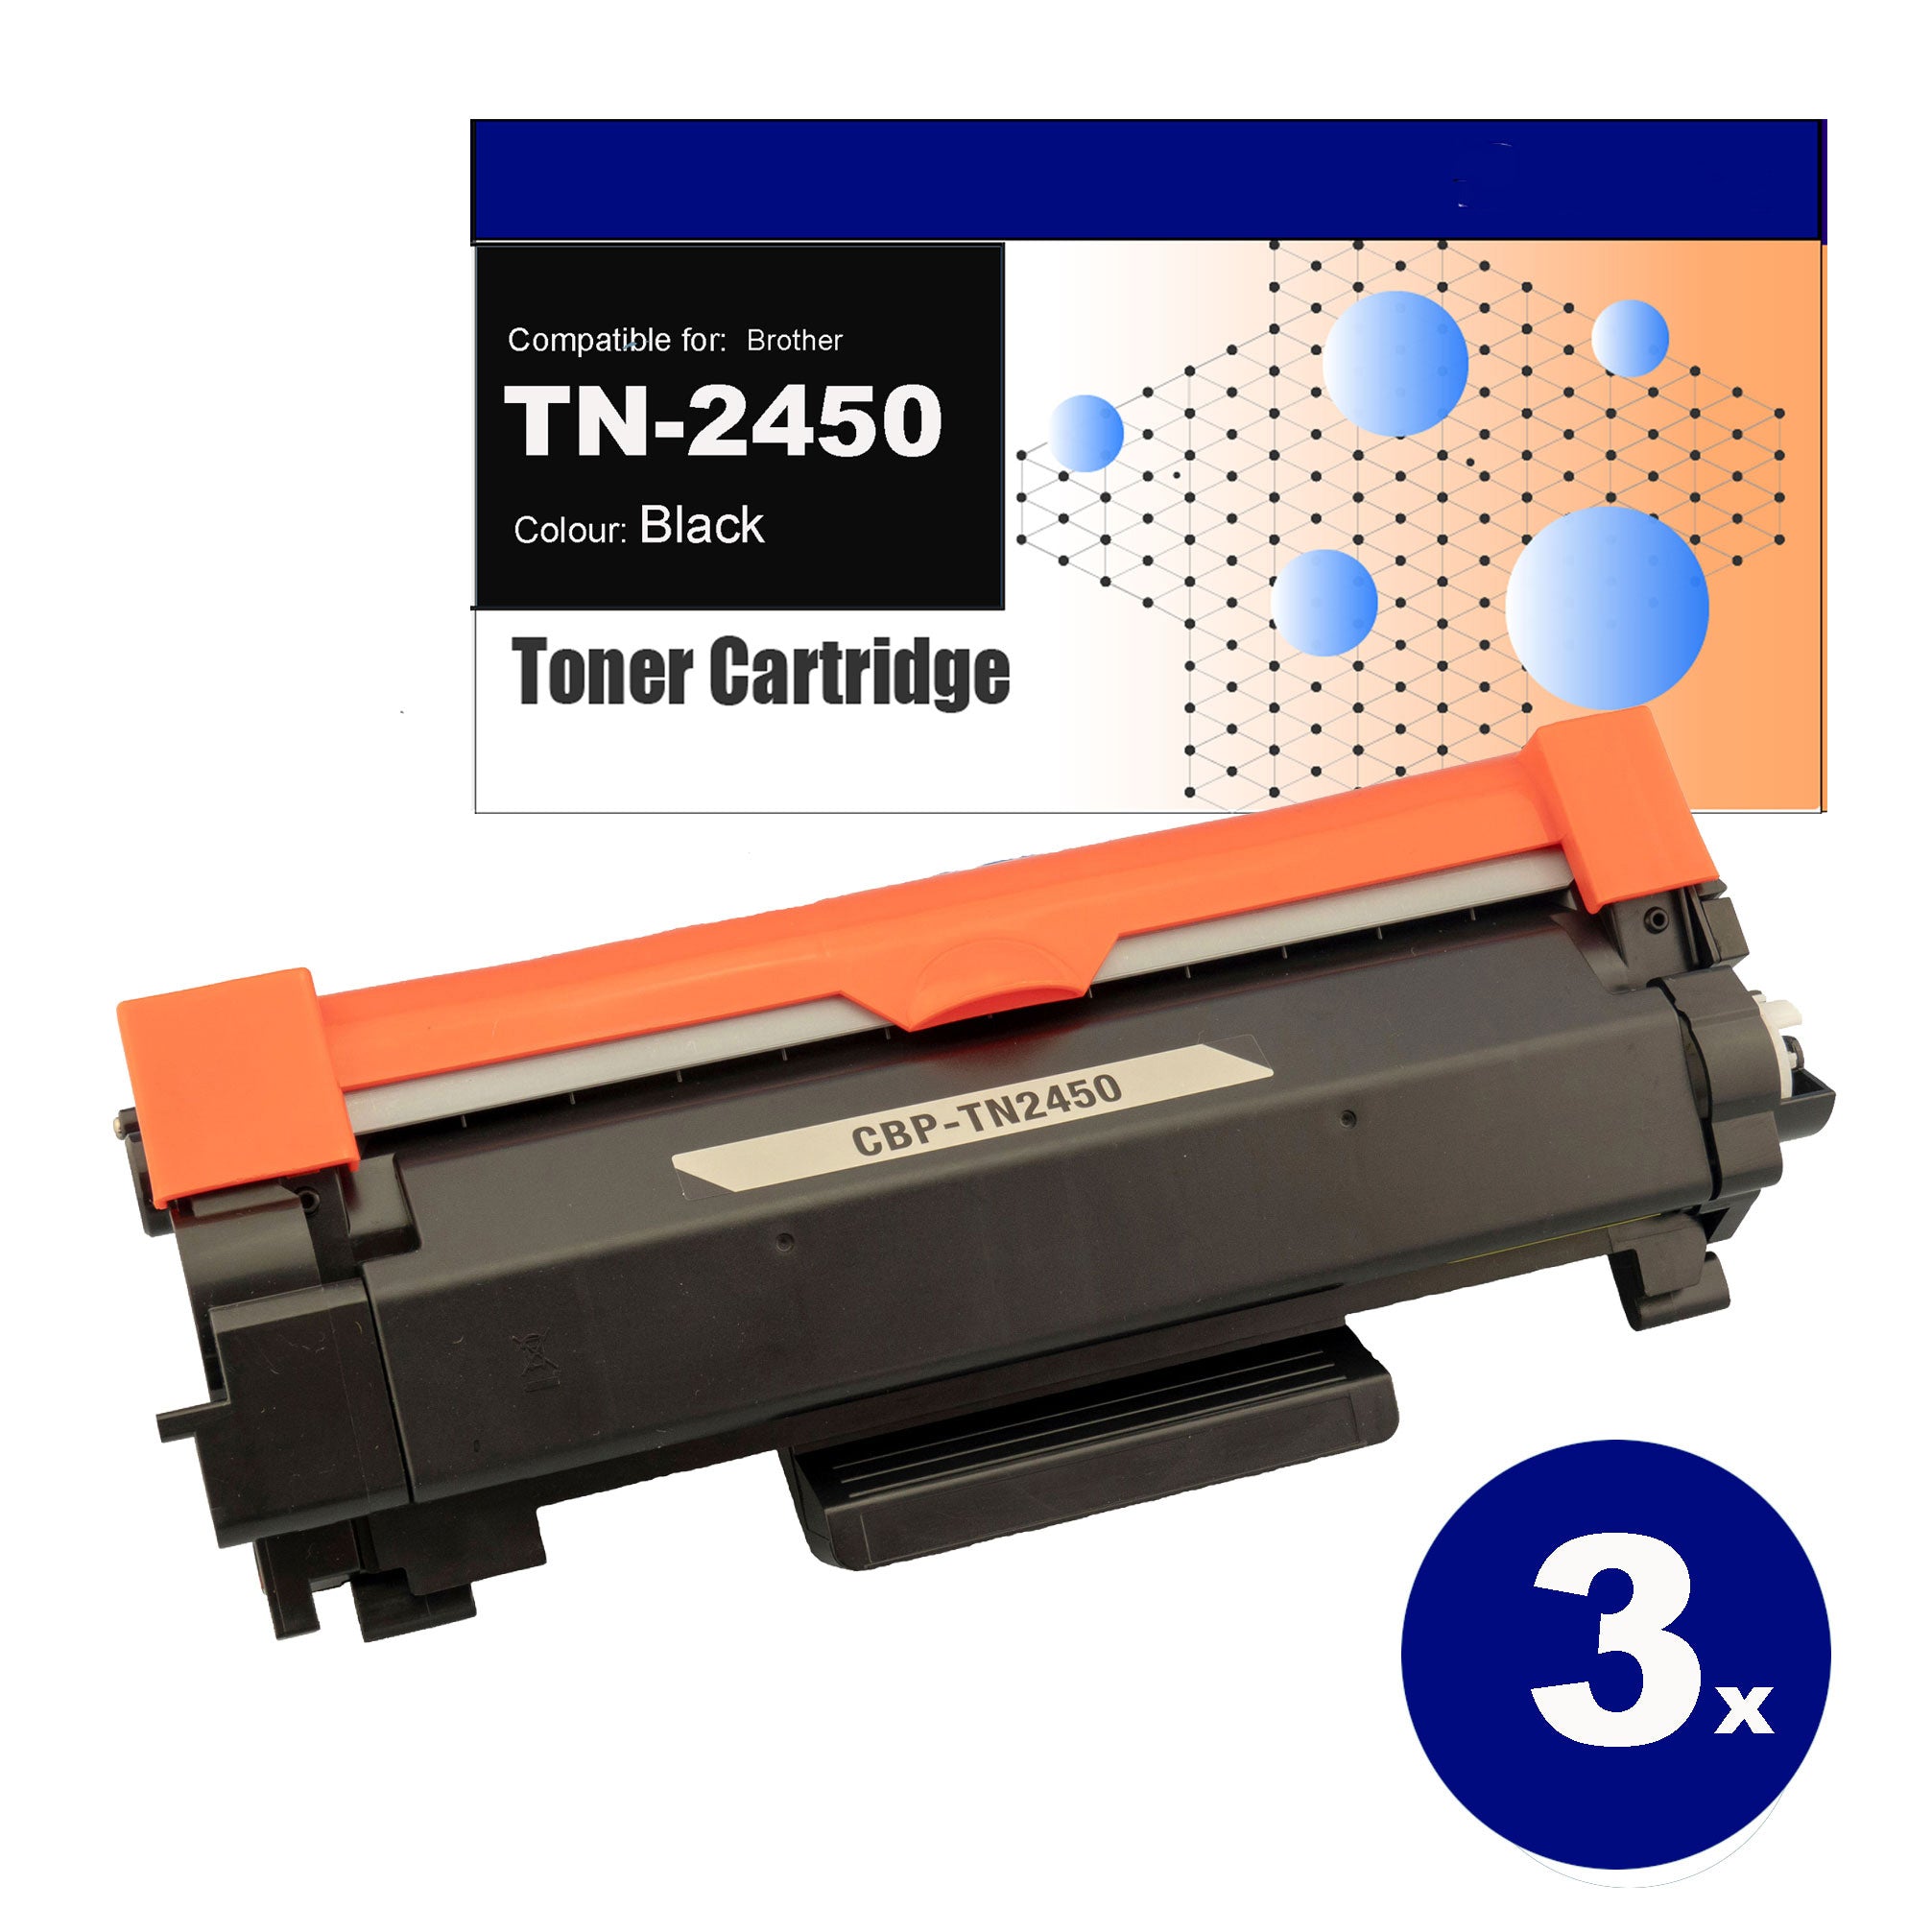 Compatible Toner for Brother TN-2450 Black Toner Cartridges